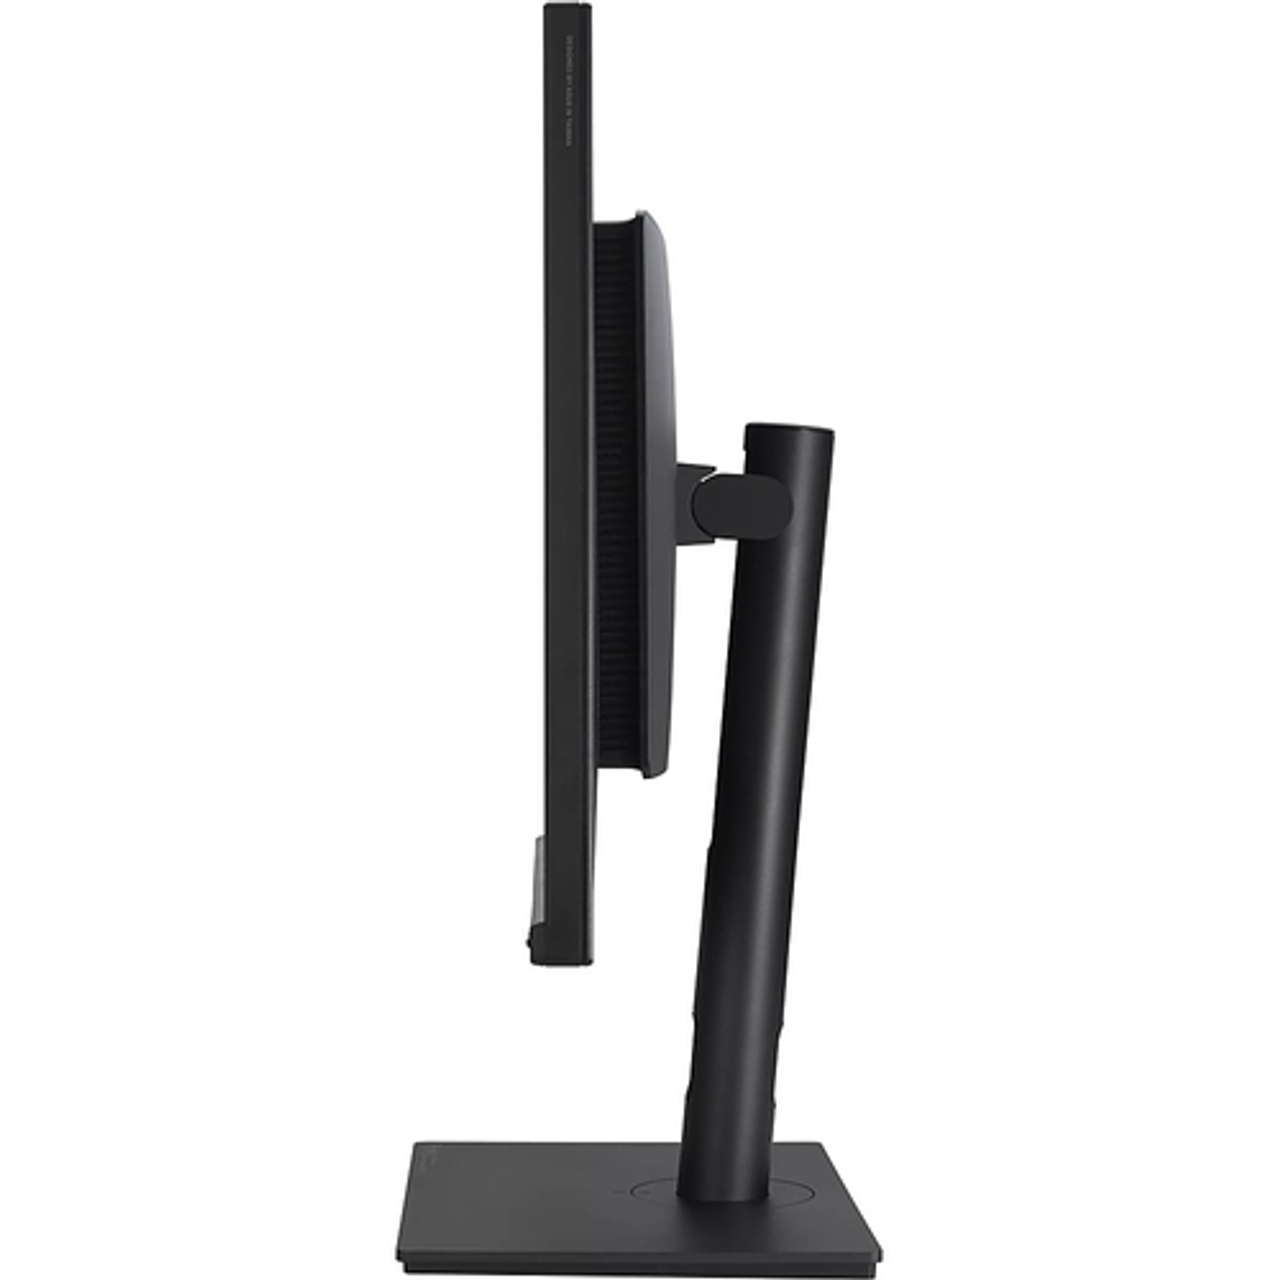 ASUS - ProArt 32" LCD Monitor with HDR (DisplayPort, USB, HDMI) - Black